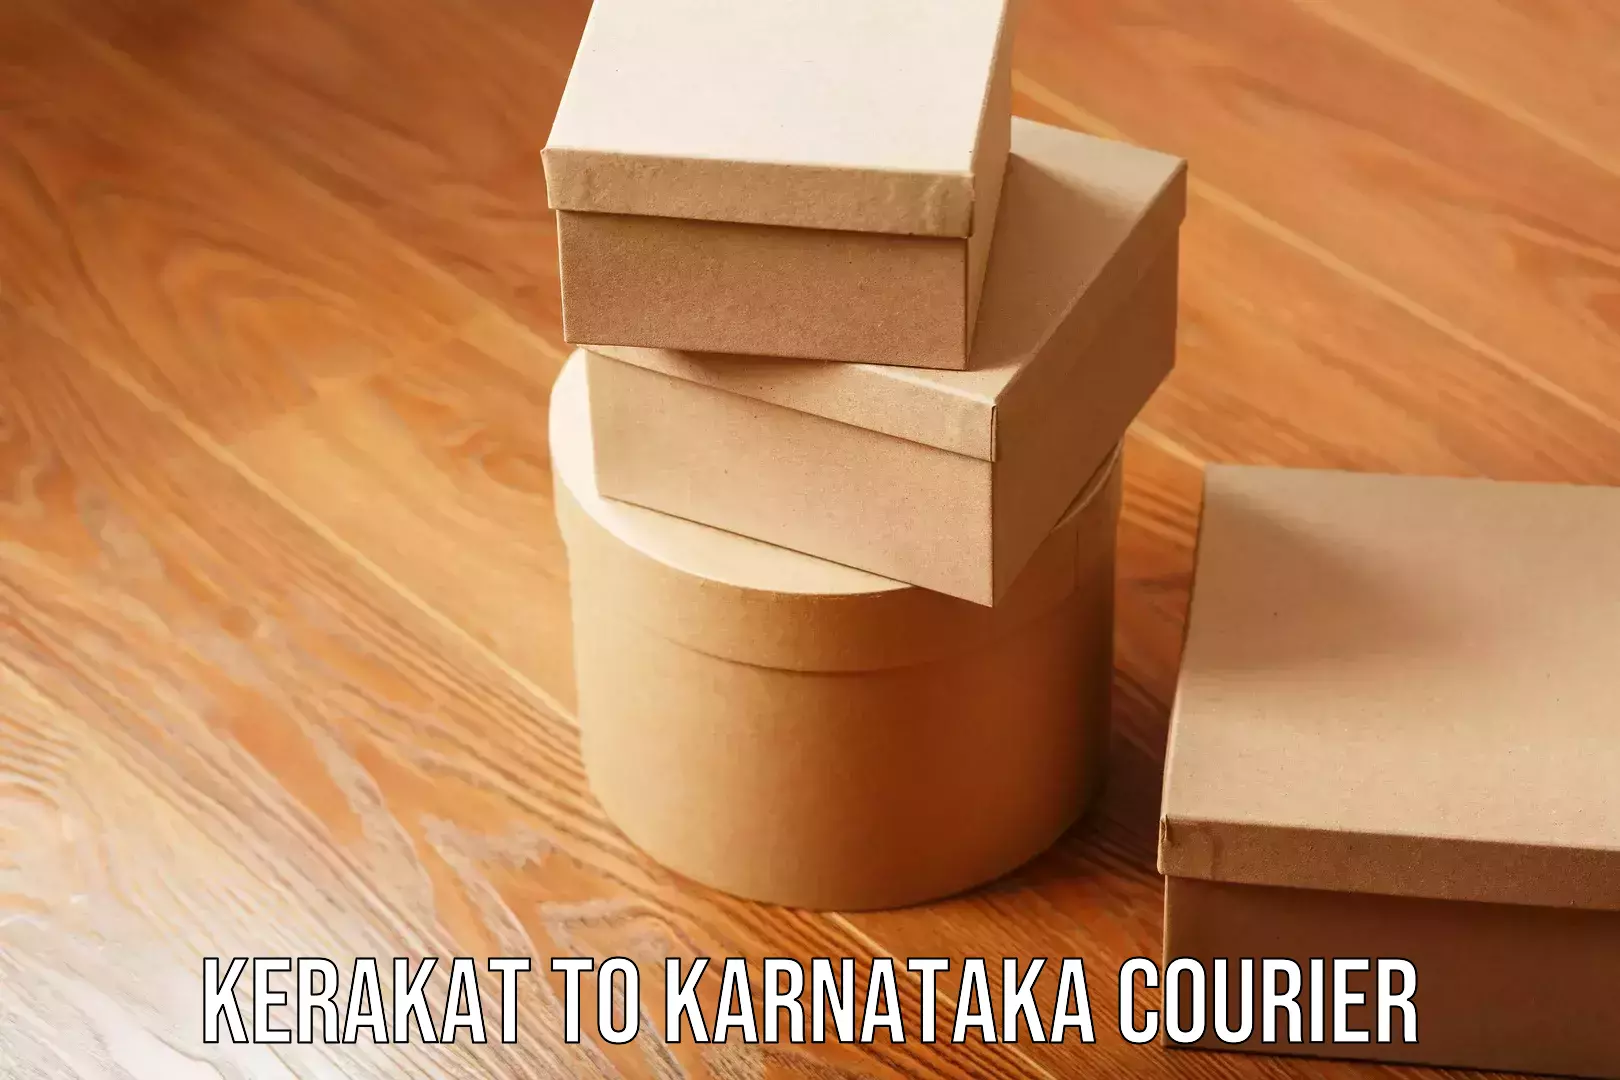 Professional home shifting Kerakat to Karnataka